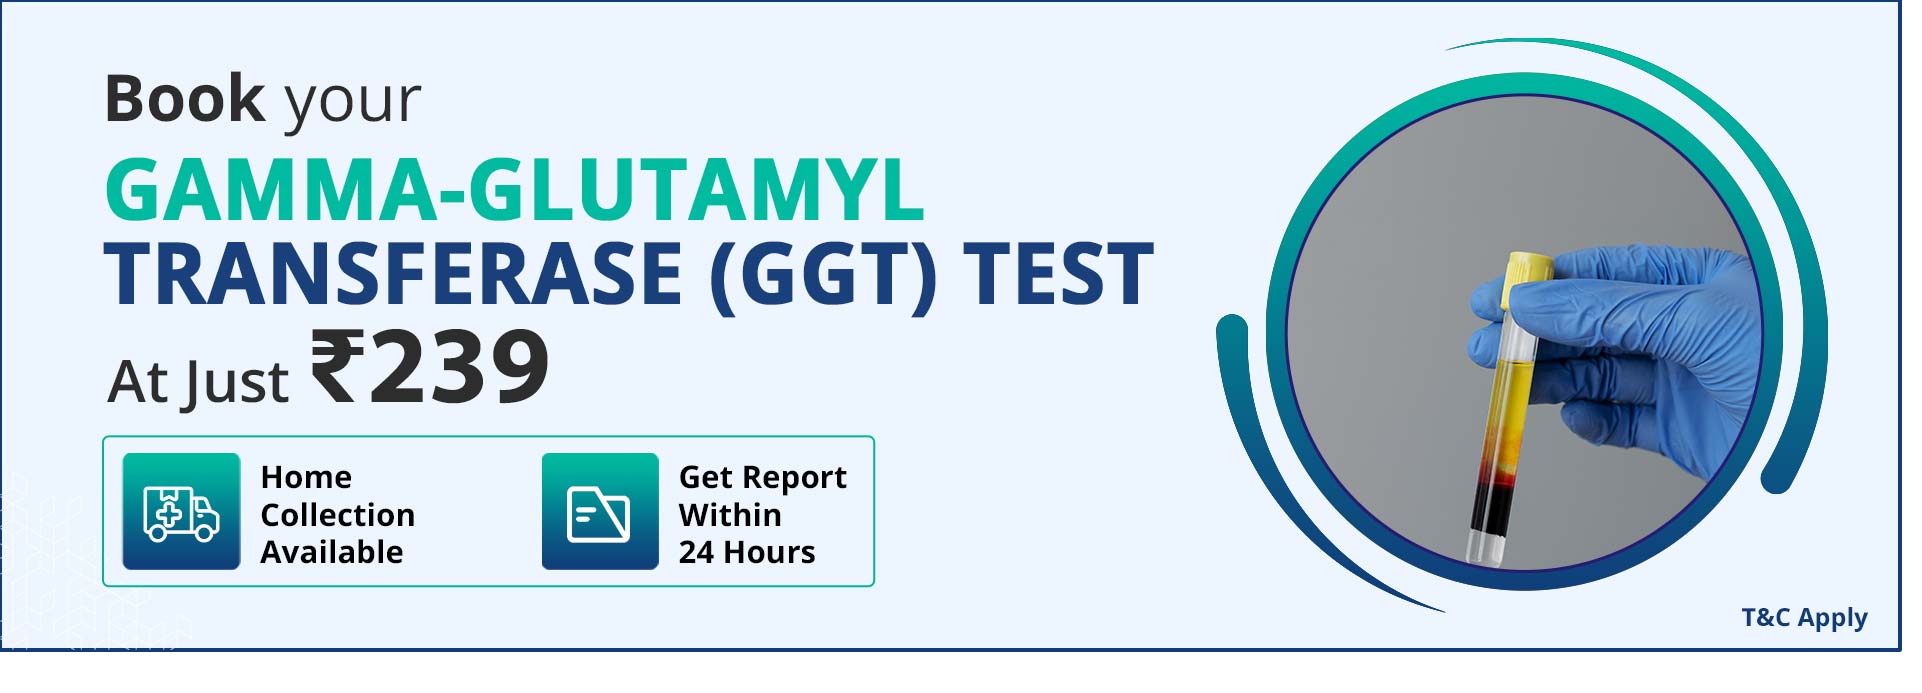 Gamma glutamyl transferase test